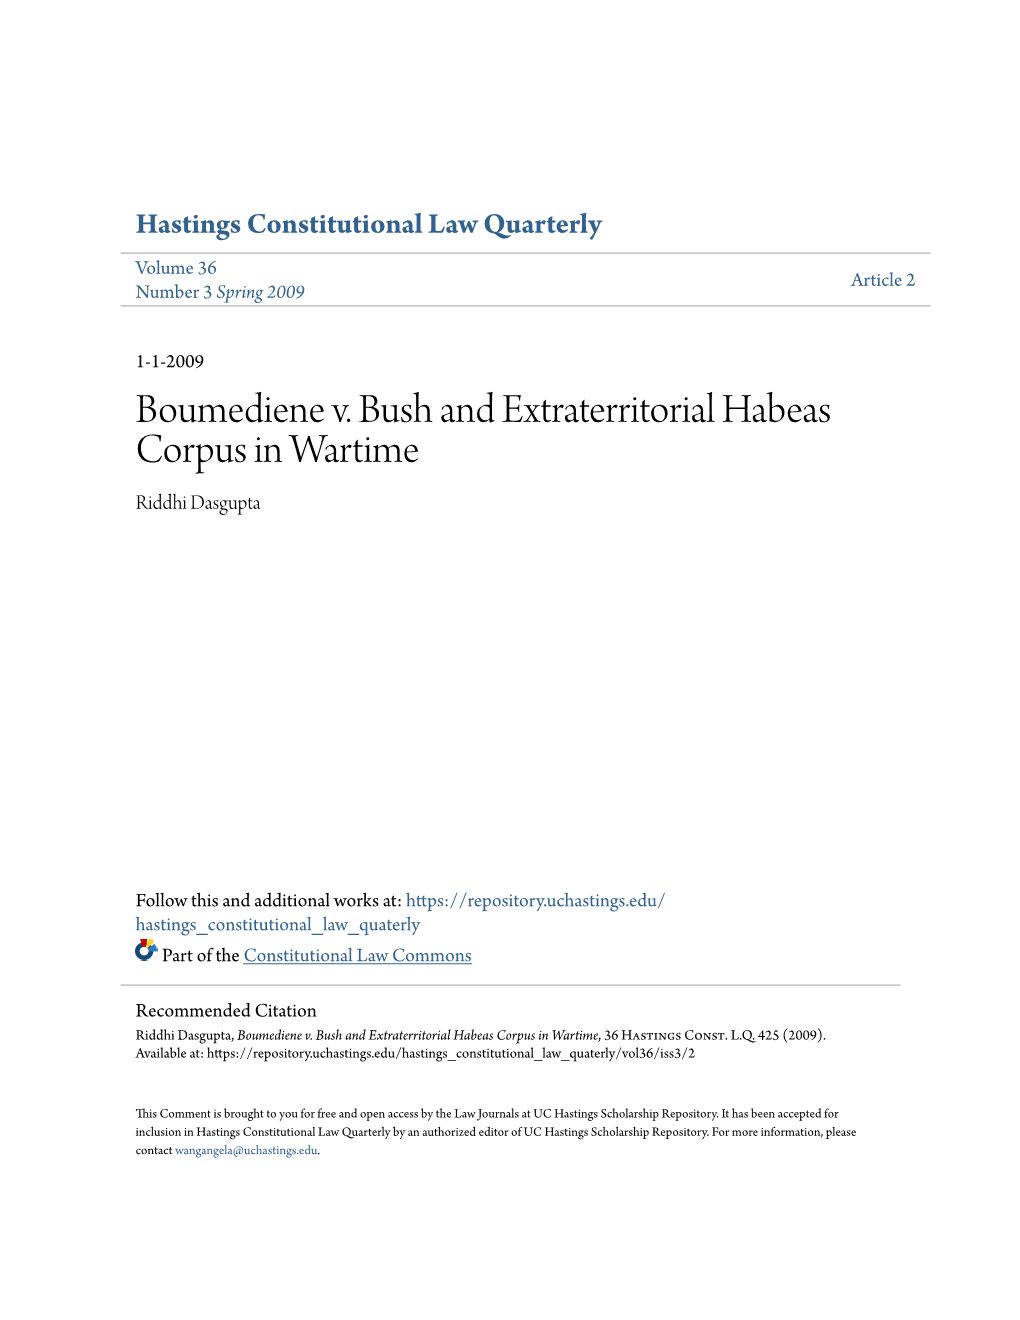 Boumediene V. Bush and Extraterritorial Habeas Corpus in Wartime Riddhi Dasgupta